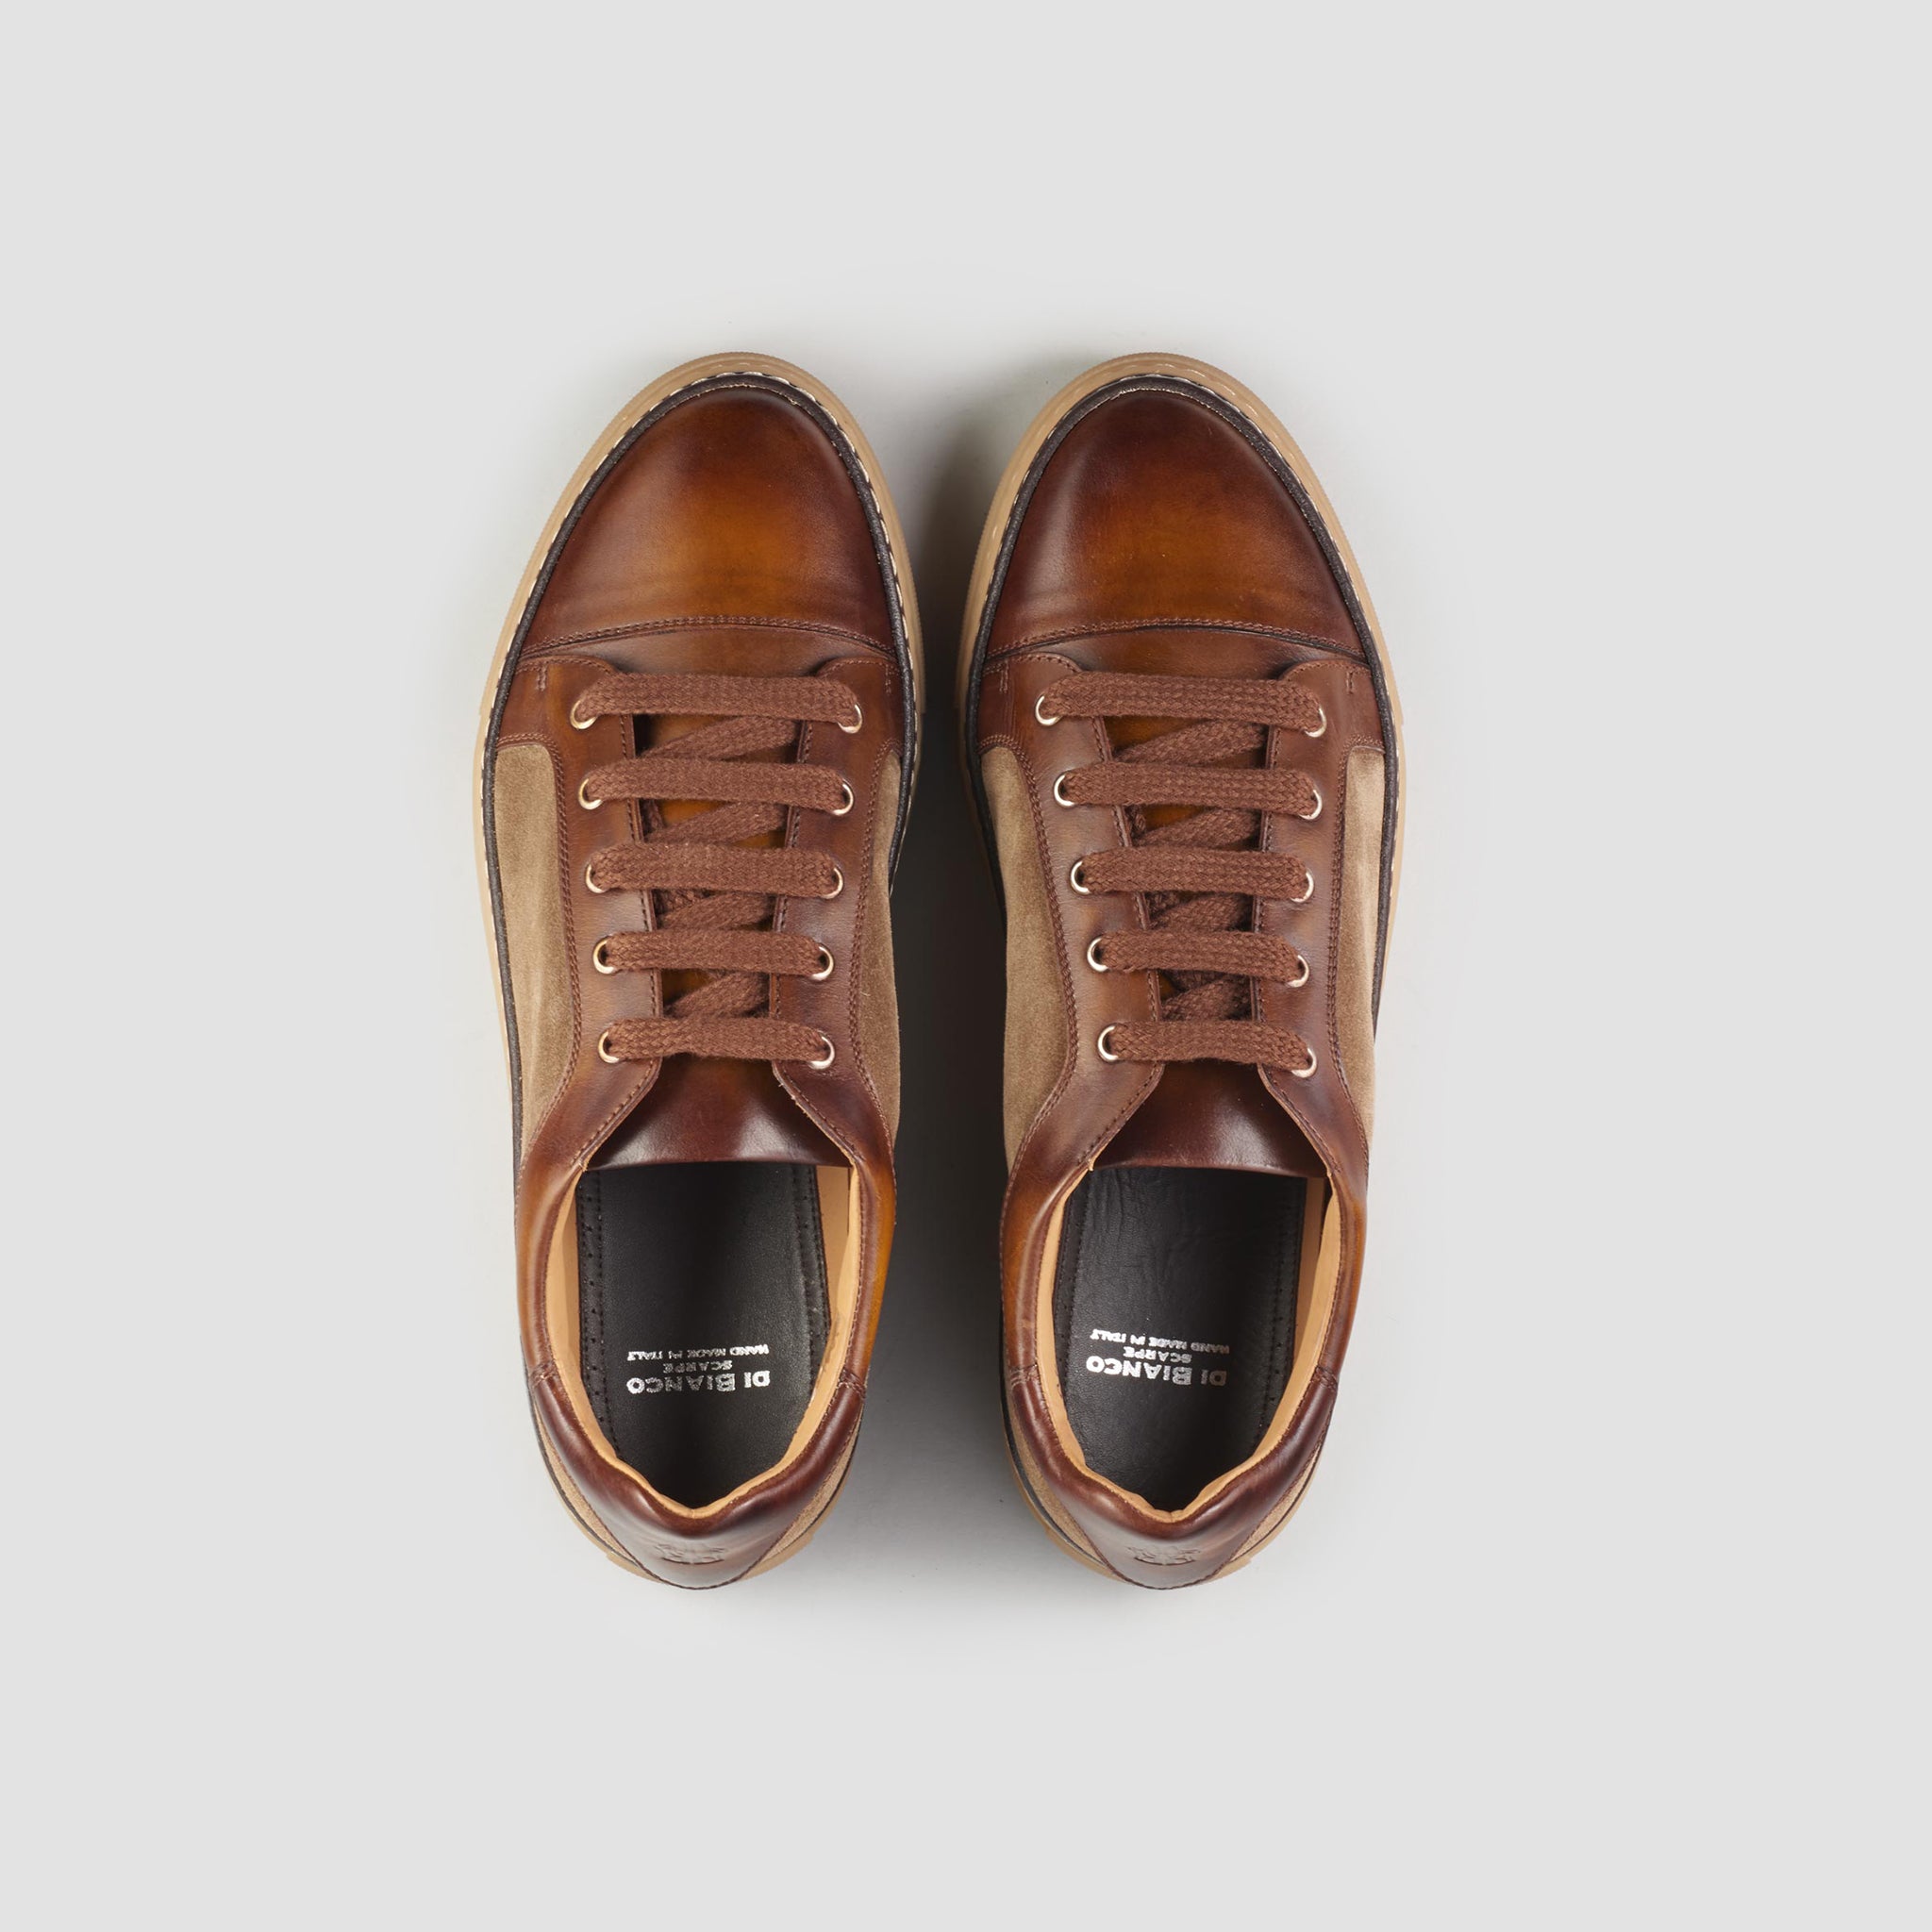 The Messina Sesamo Leather Sneakers for Men